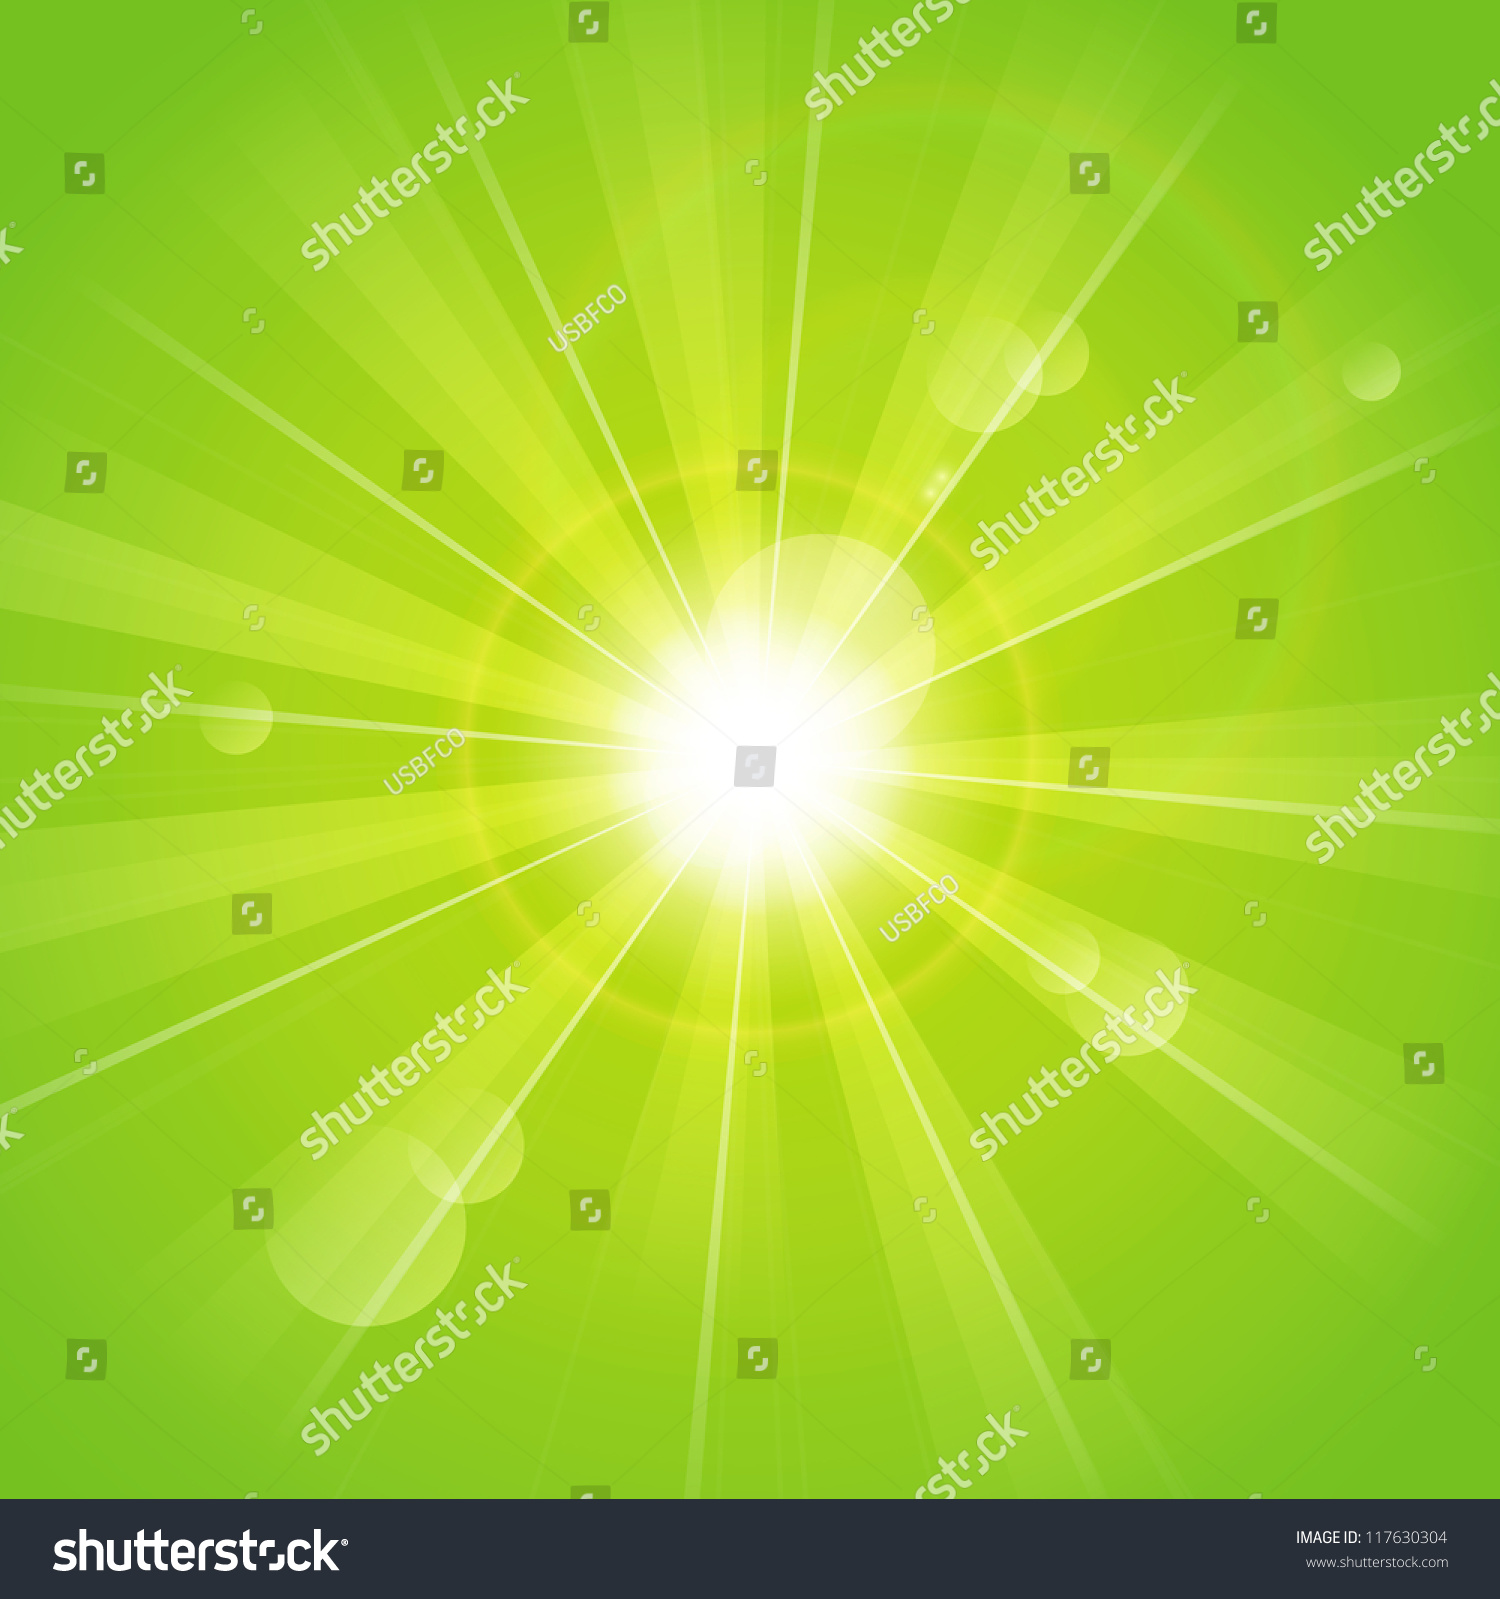 Green Sunny Rays Background Stock Vector 117630304 : Shutterstock